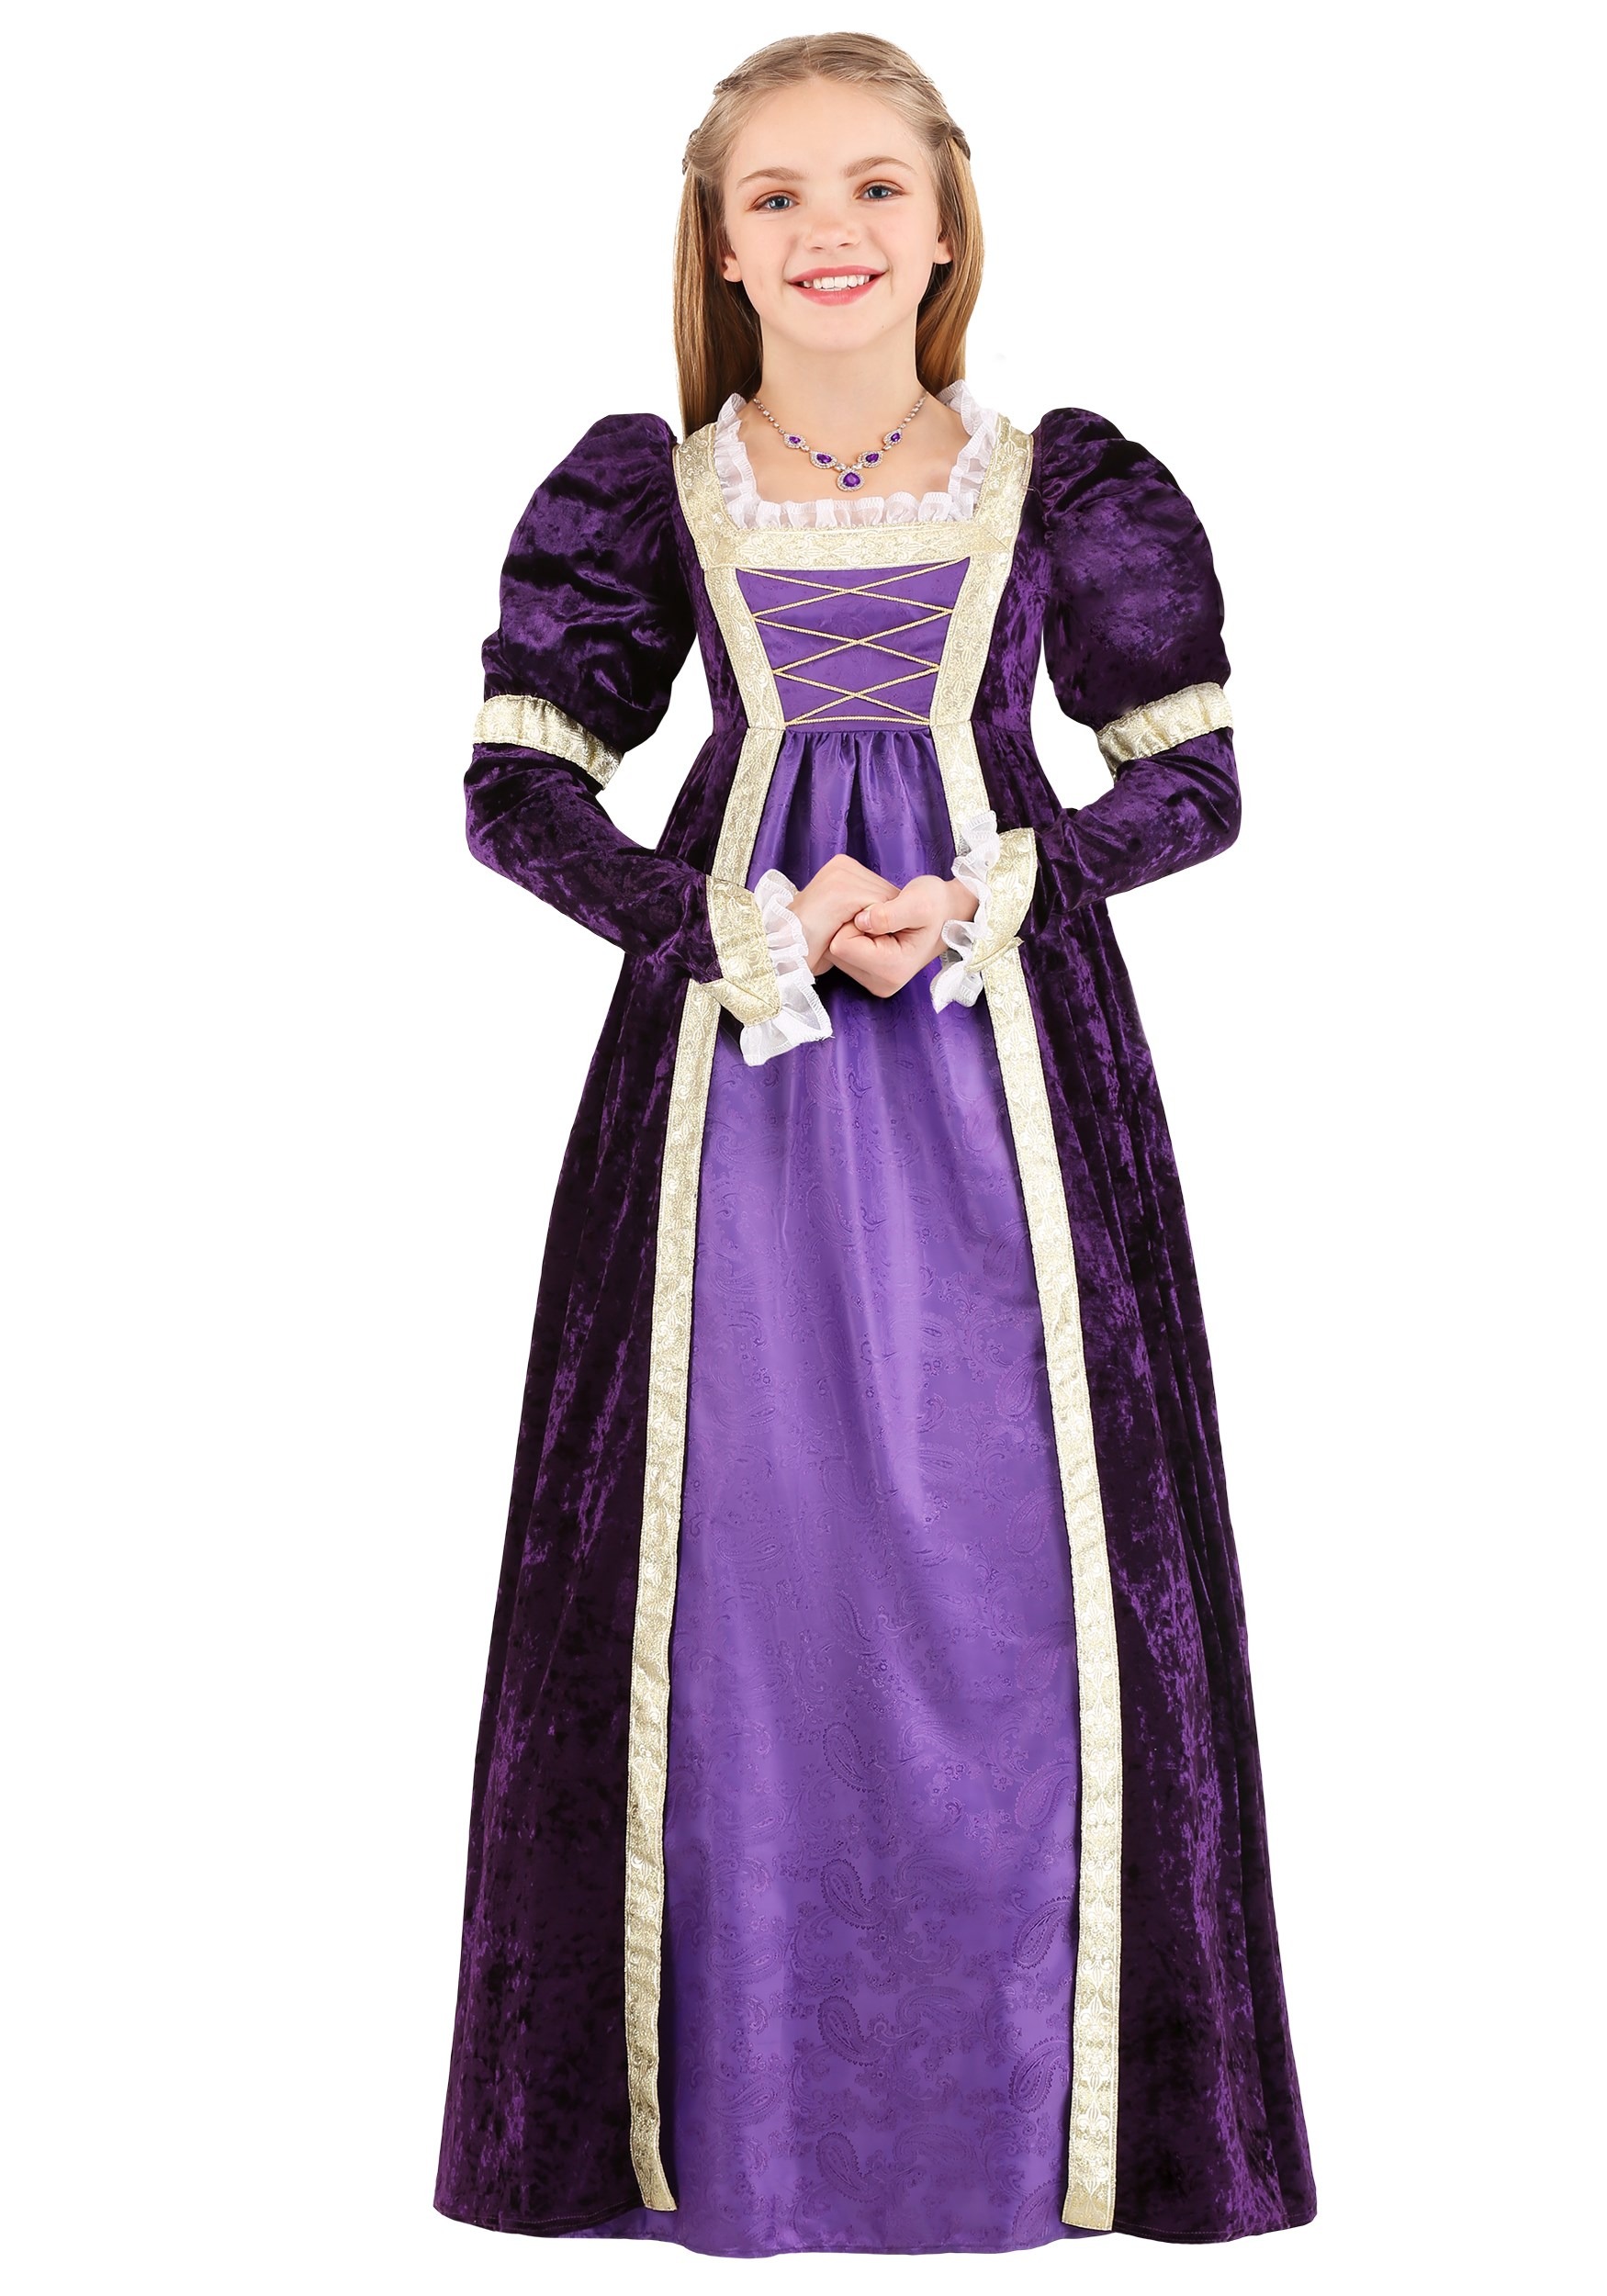 Kid's Amethyst Princess Costume | Historical Costumes